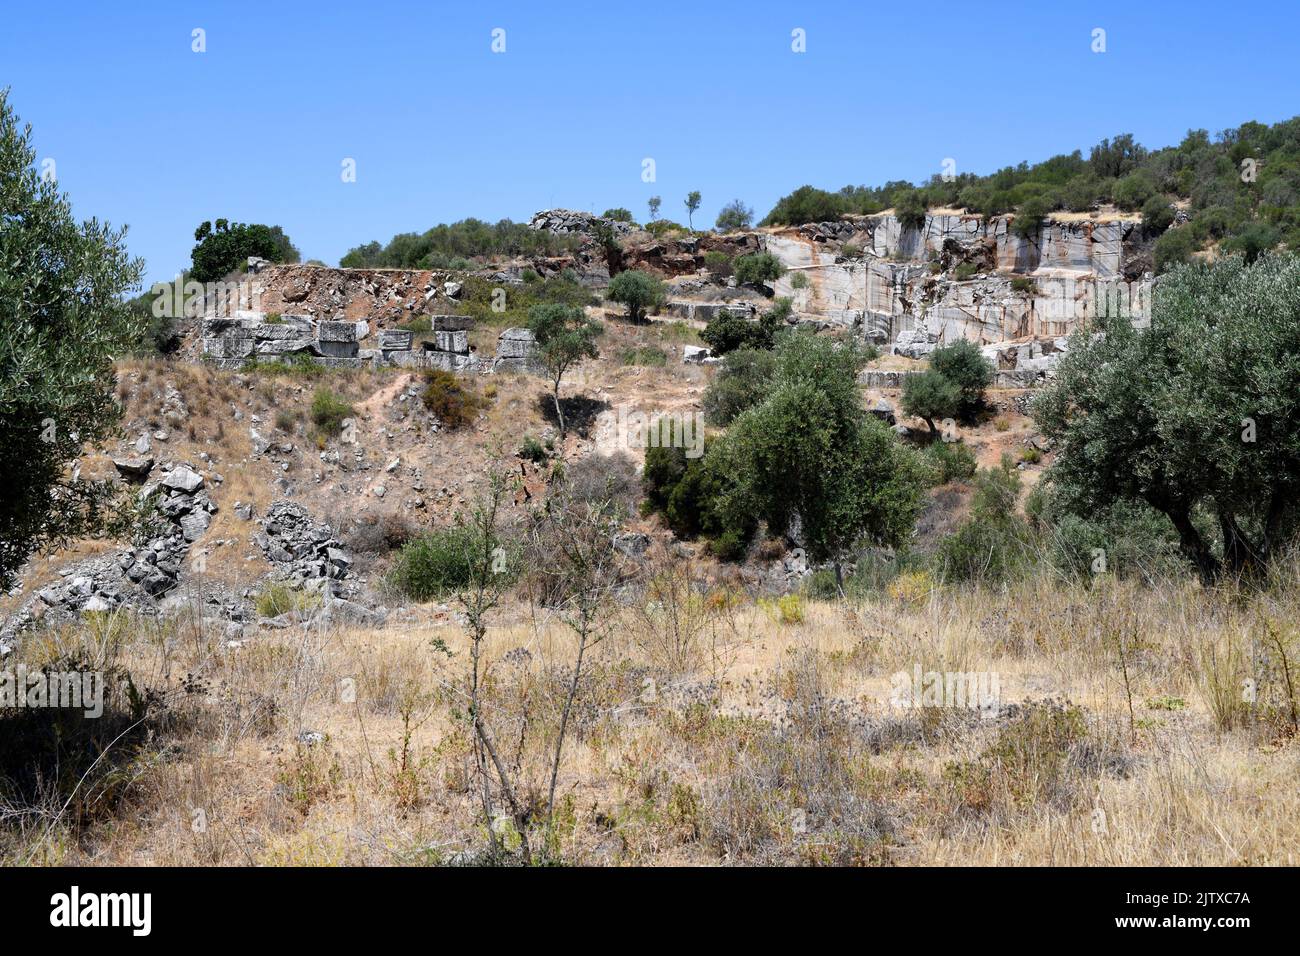 Green Viana marble quarry in Viana do Alentejo, Portugal. Stock Photo